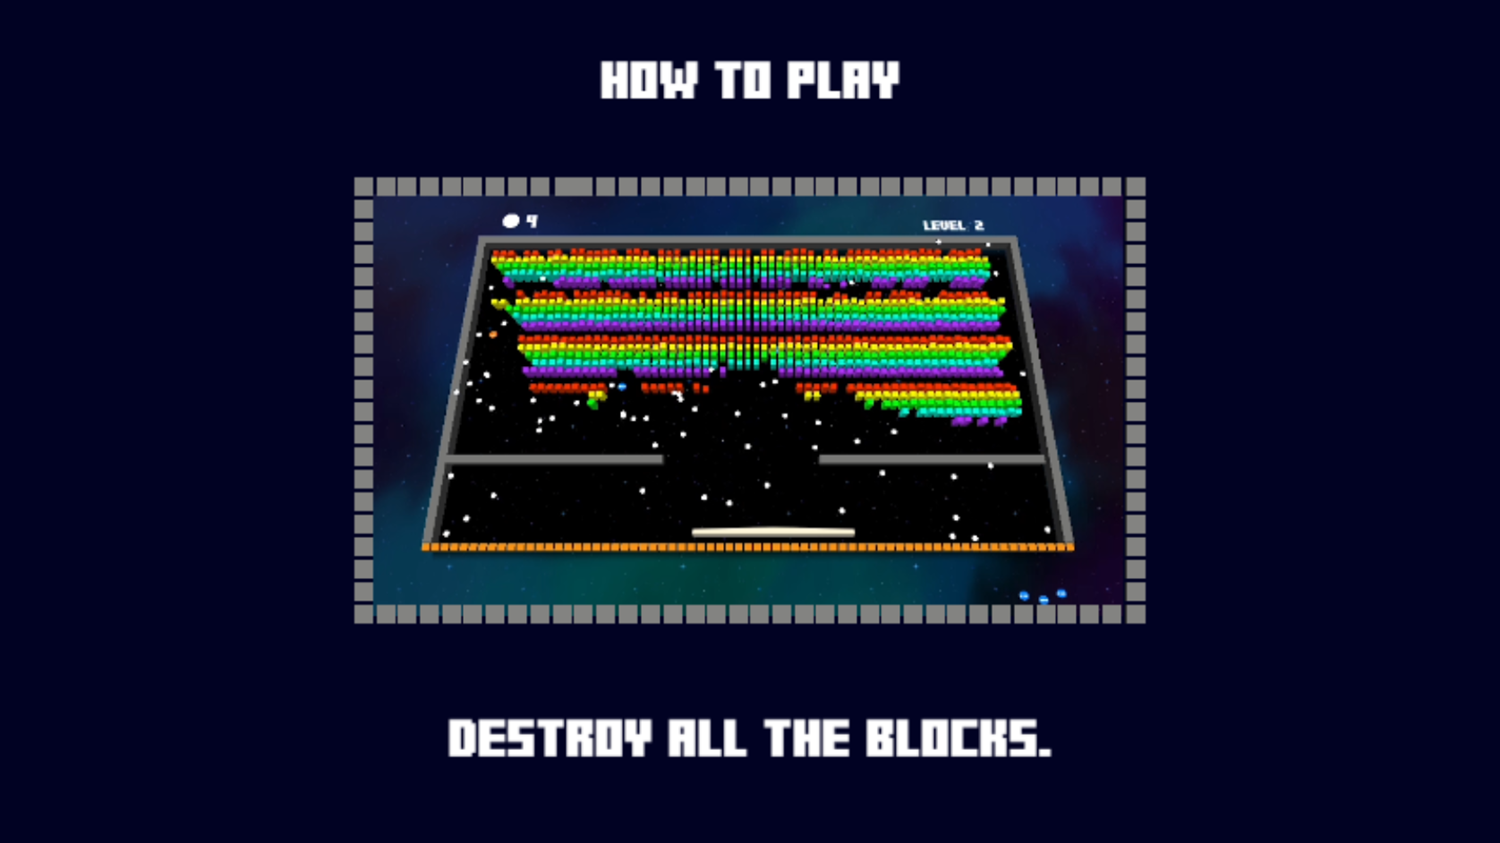 Many Bricks Block 3D Game How To Play Screenshot.